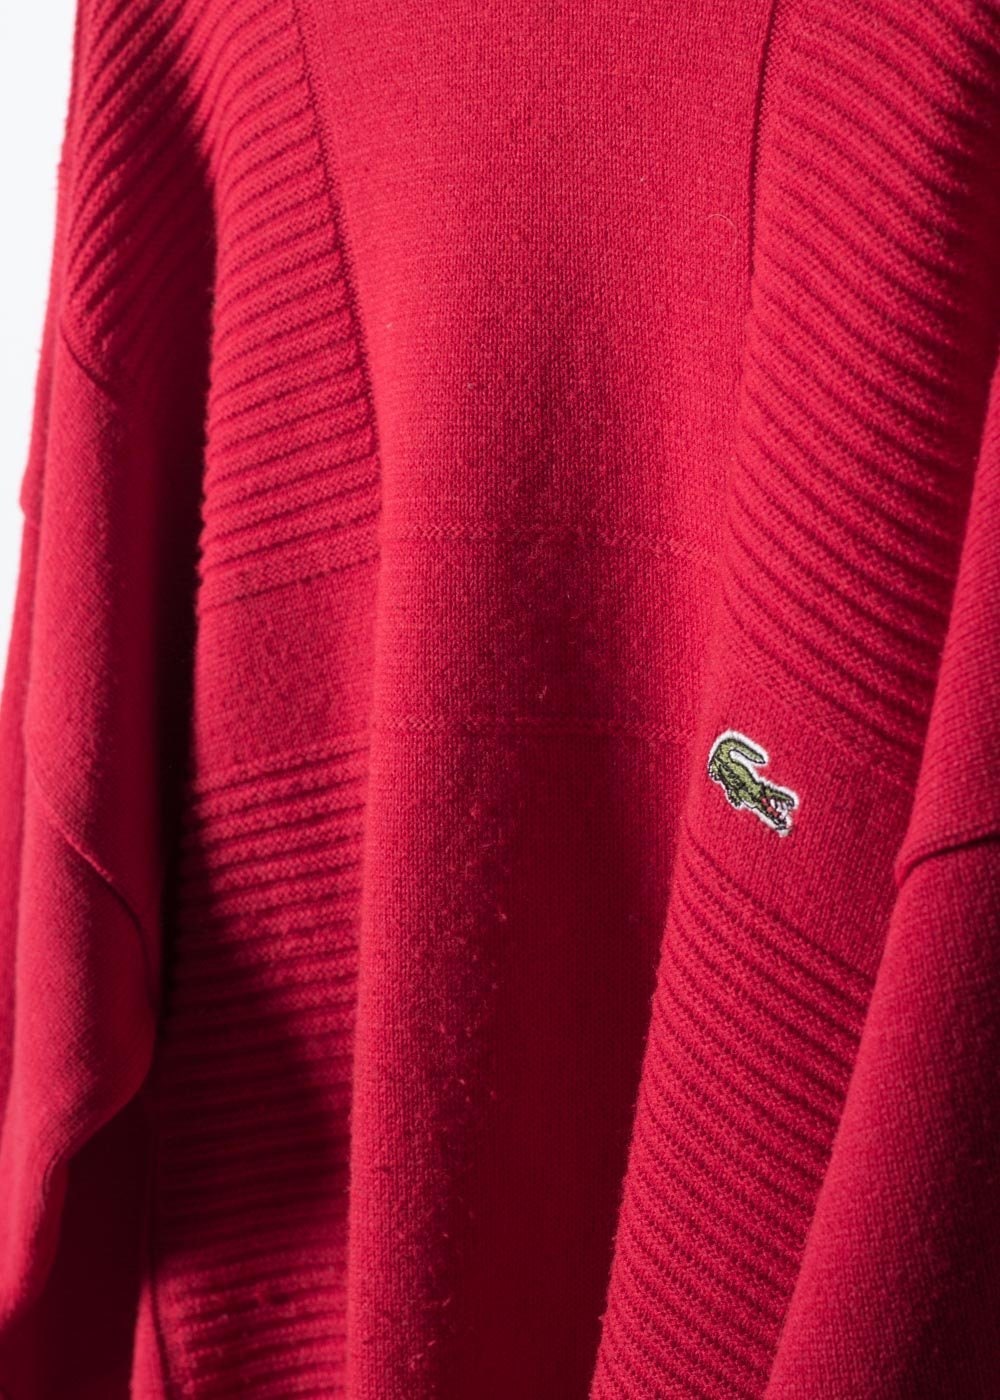 Lacoste Men's Knit Sweater in Red | Etsy